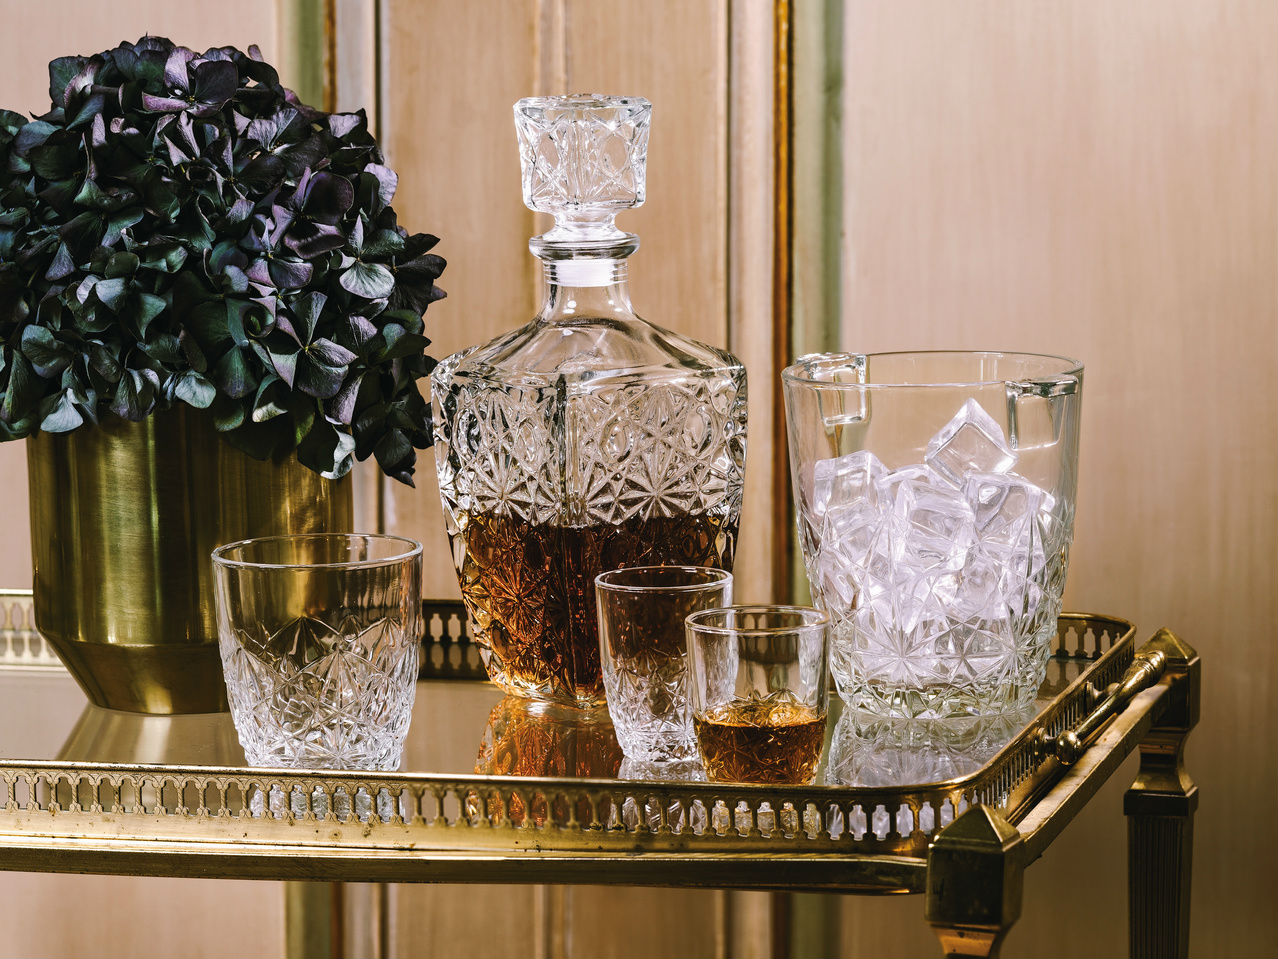 Introducing the Exquisite Bormioli Rocco Milano Glassware Collection